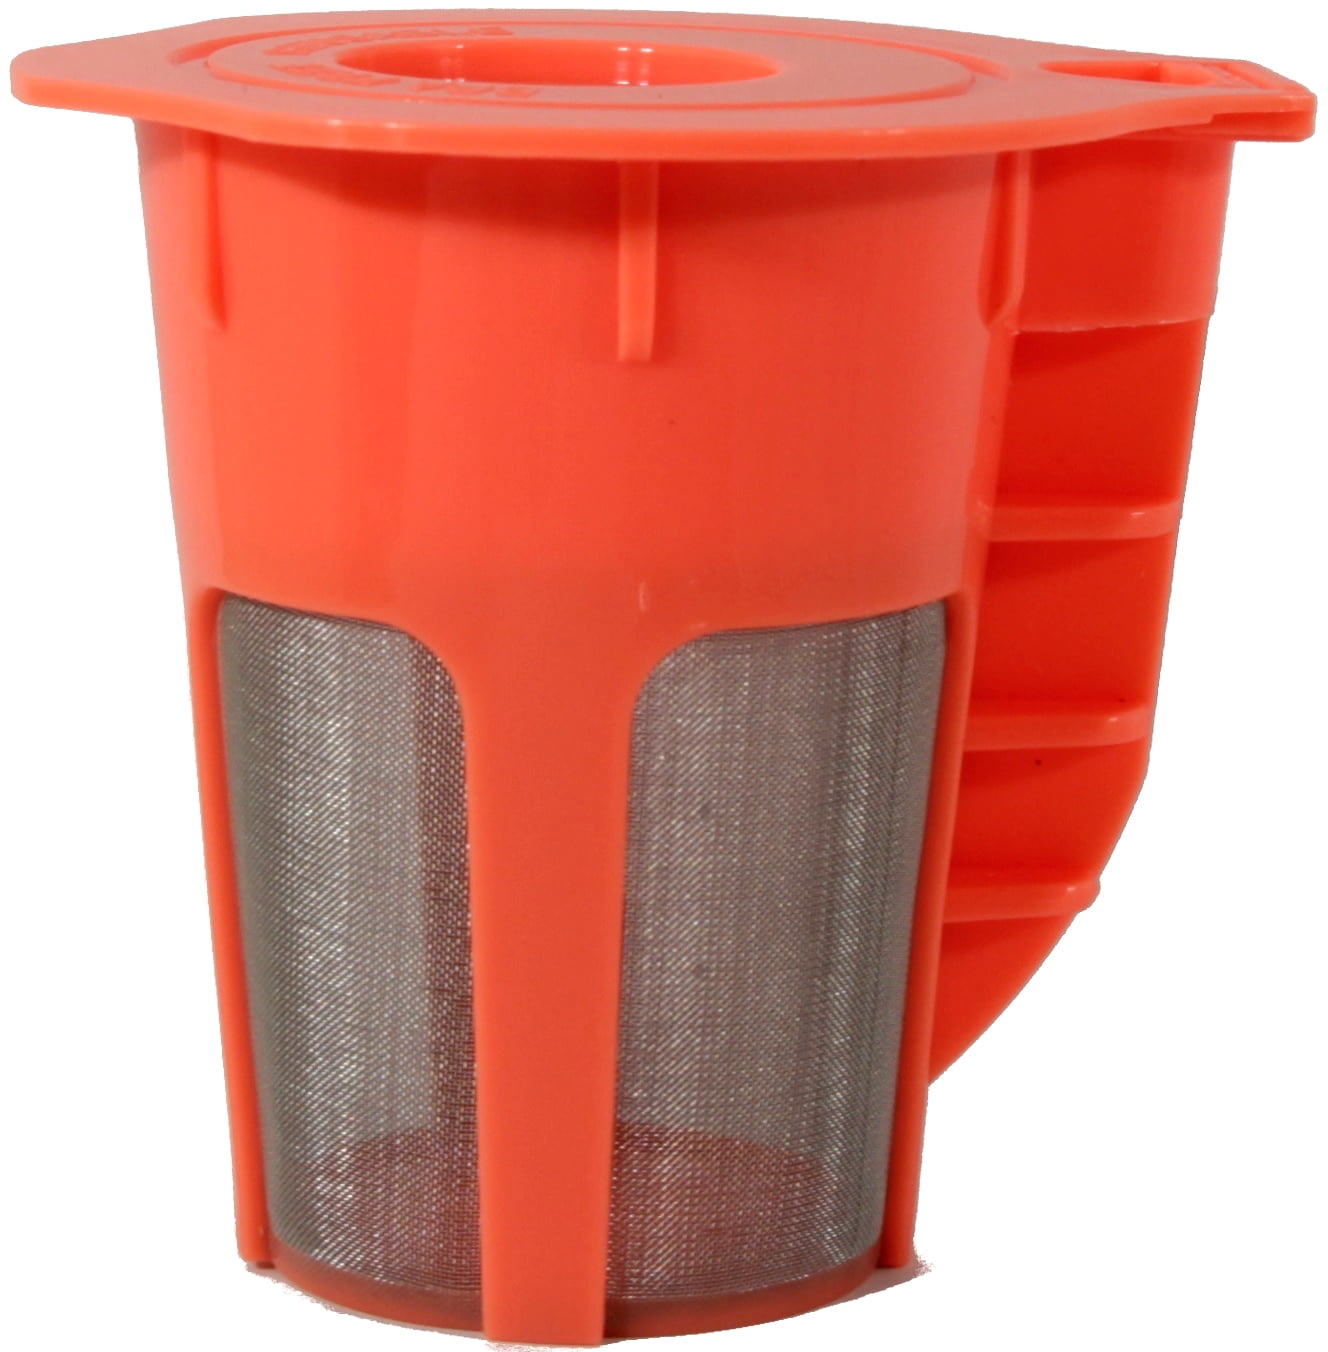 6 Keurig 2.0 K Carafe K-Cups Reusable Refillable Coffee Filter Orange 